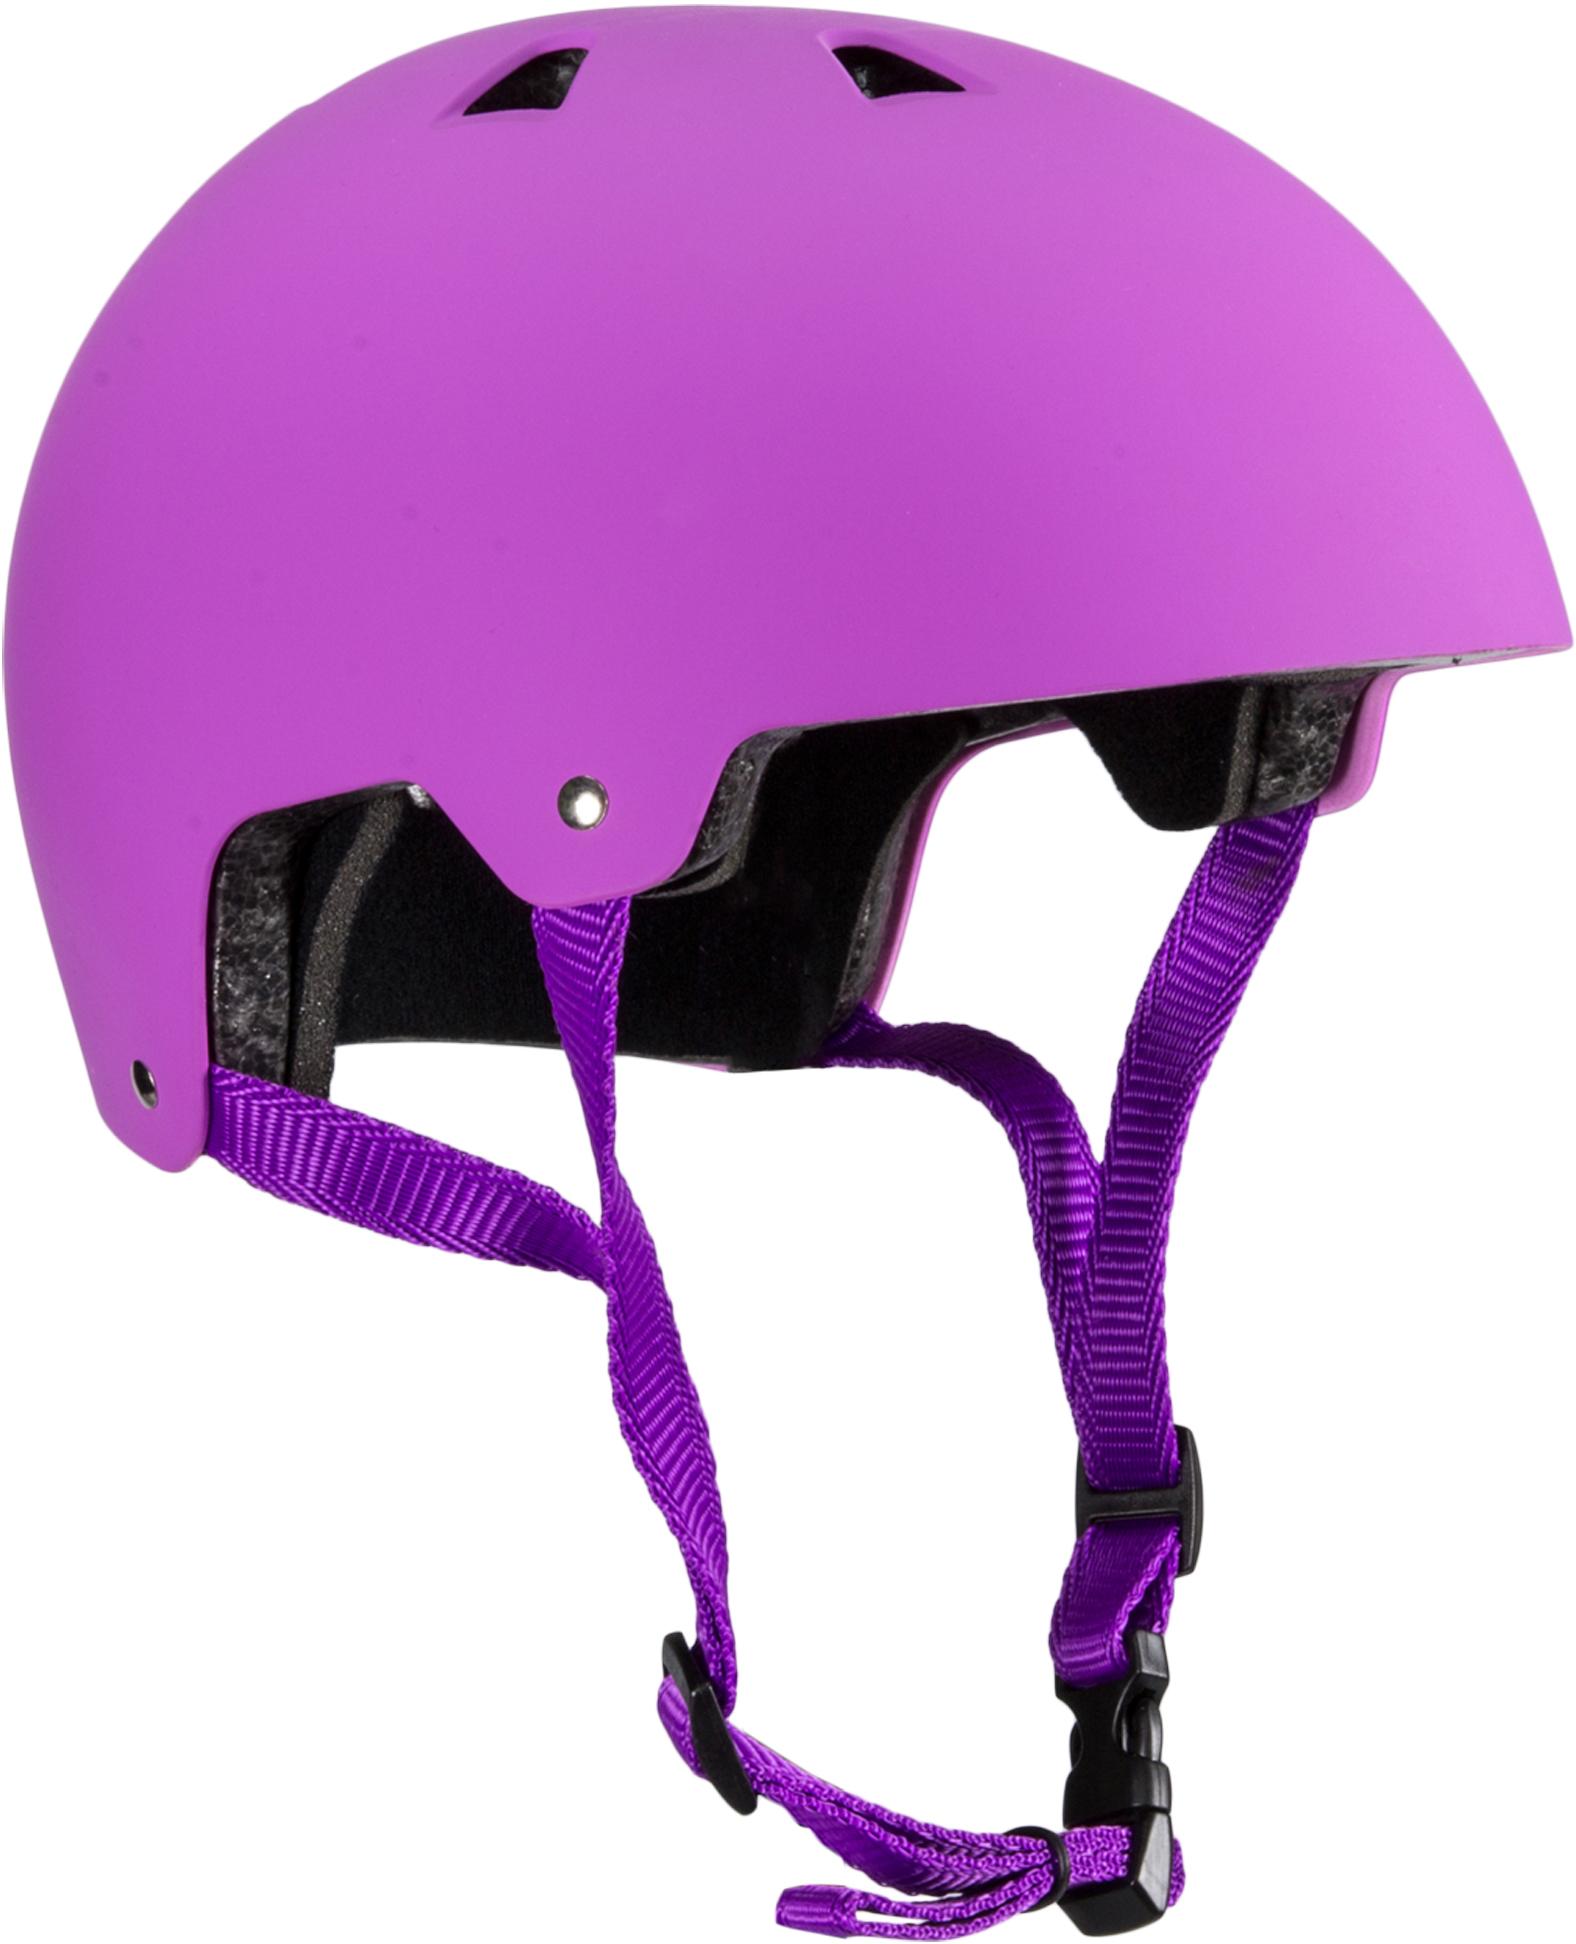 Harsh Abs Helmet Pink, Small (47-50Cm)